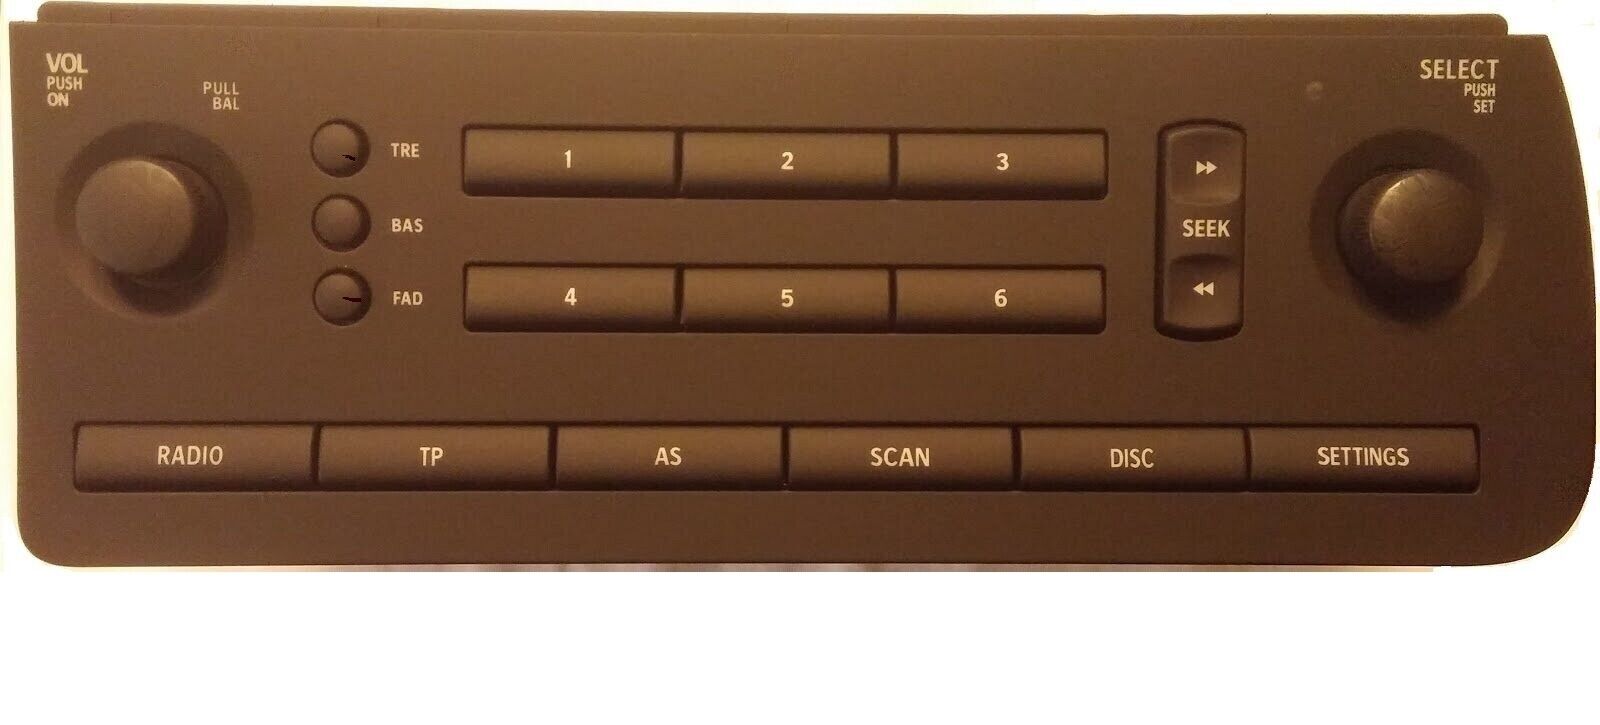 Saab 9-3 radio CD control unit. OEM factory original stereo head.Perfect buttons